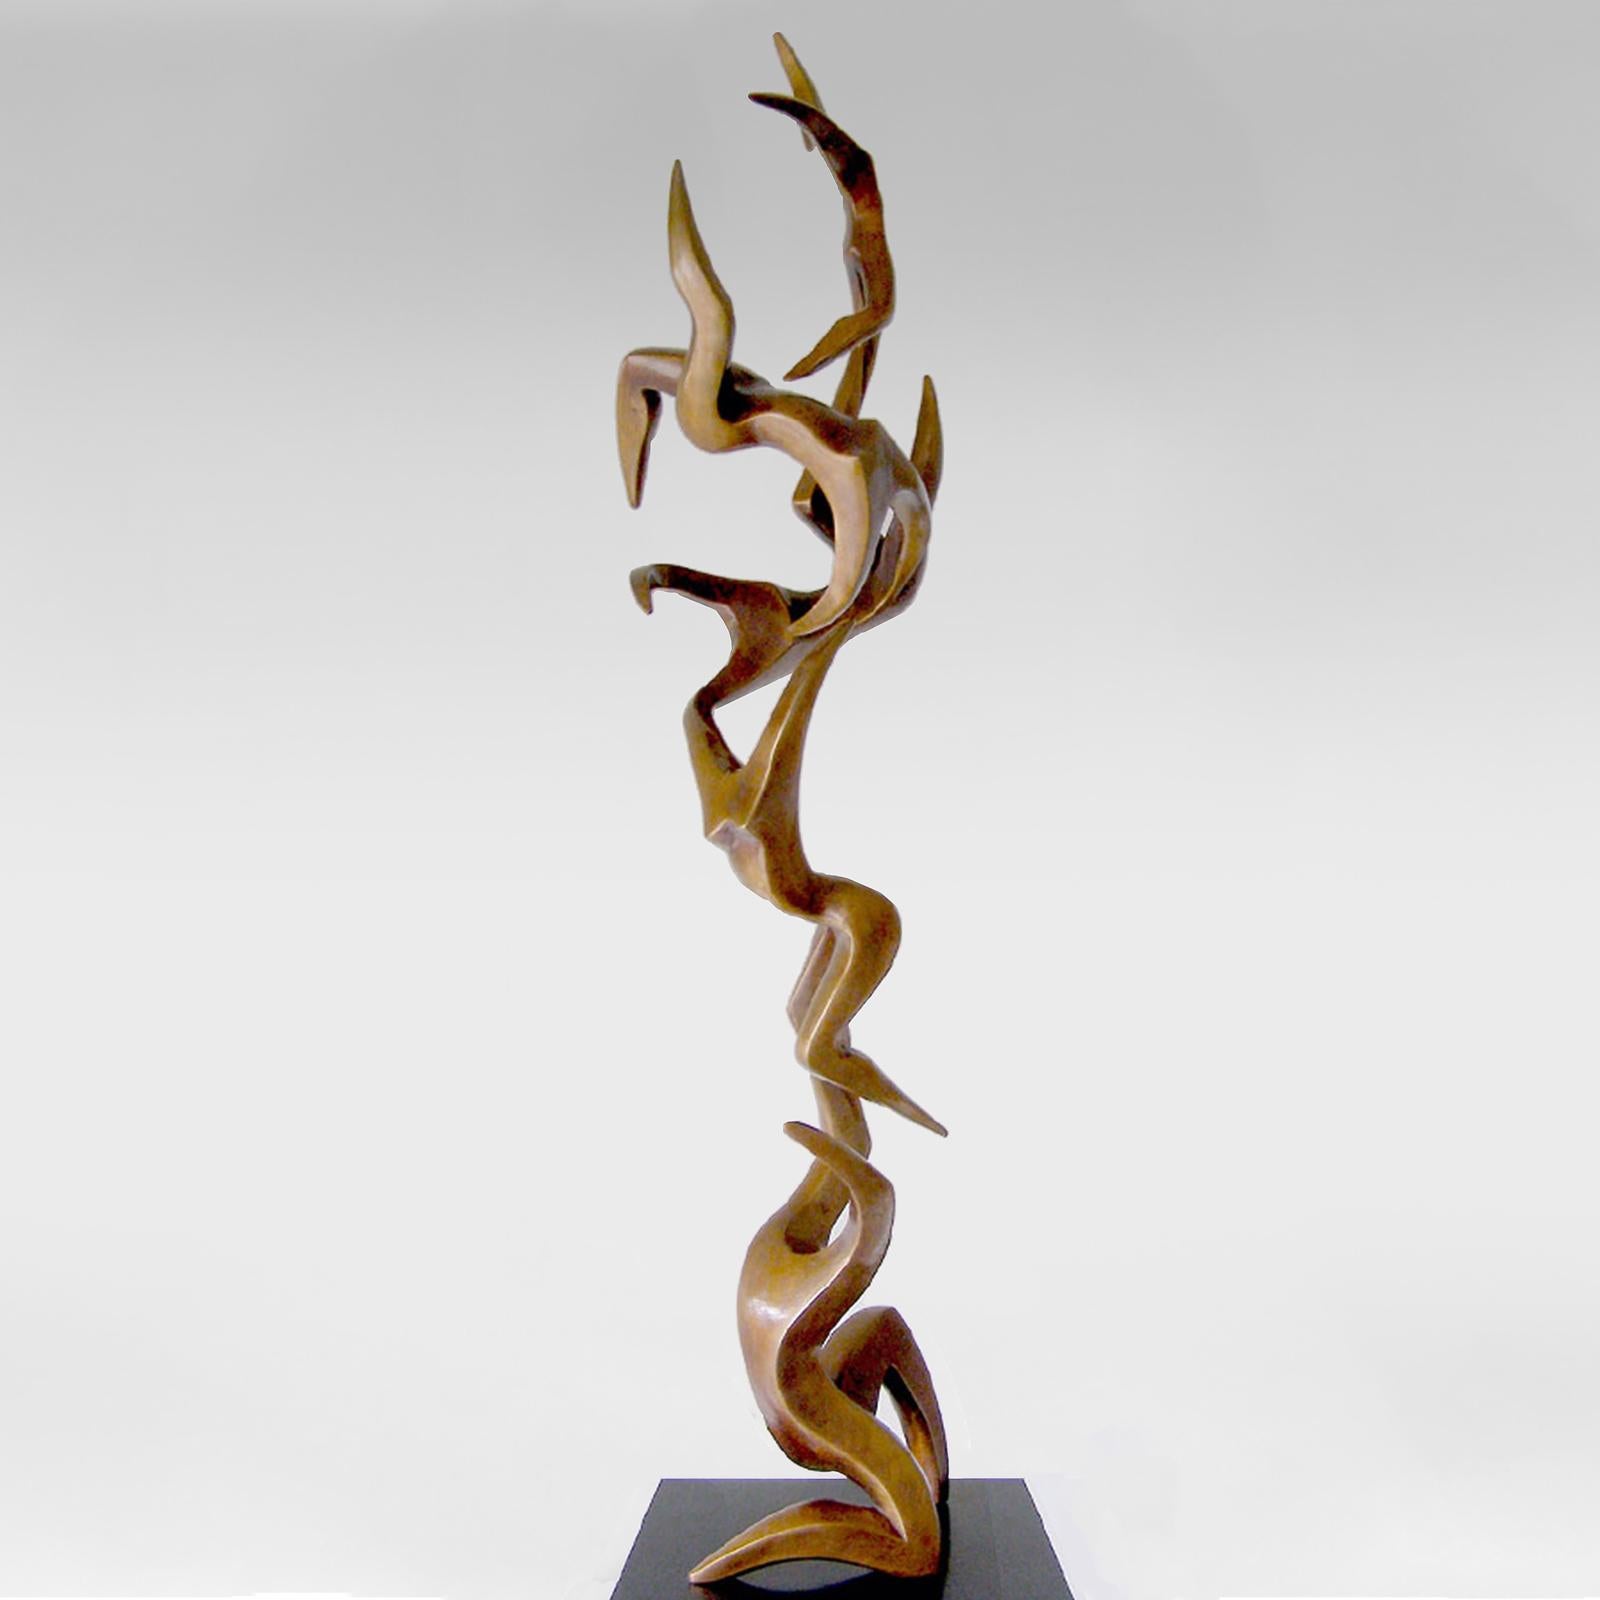 Michael Vaynman Figurative Sculpture - Flight , Contemporary Bronze Sculpture